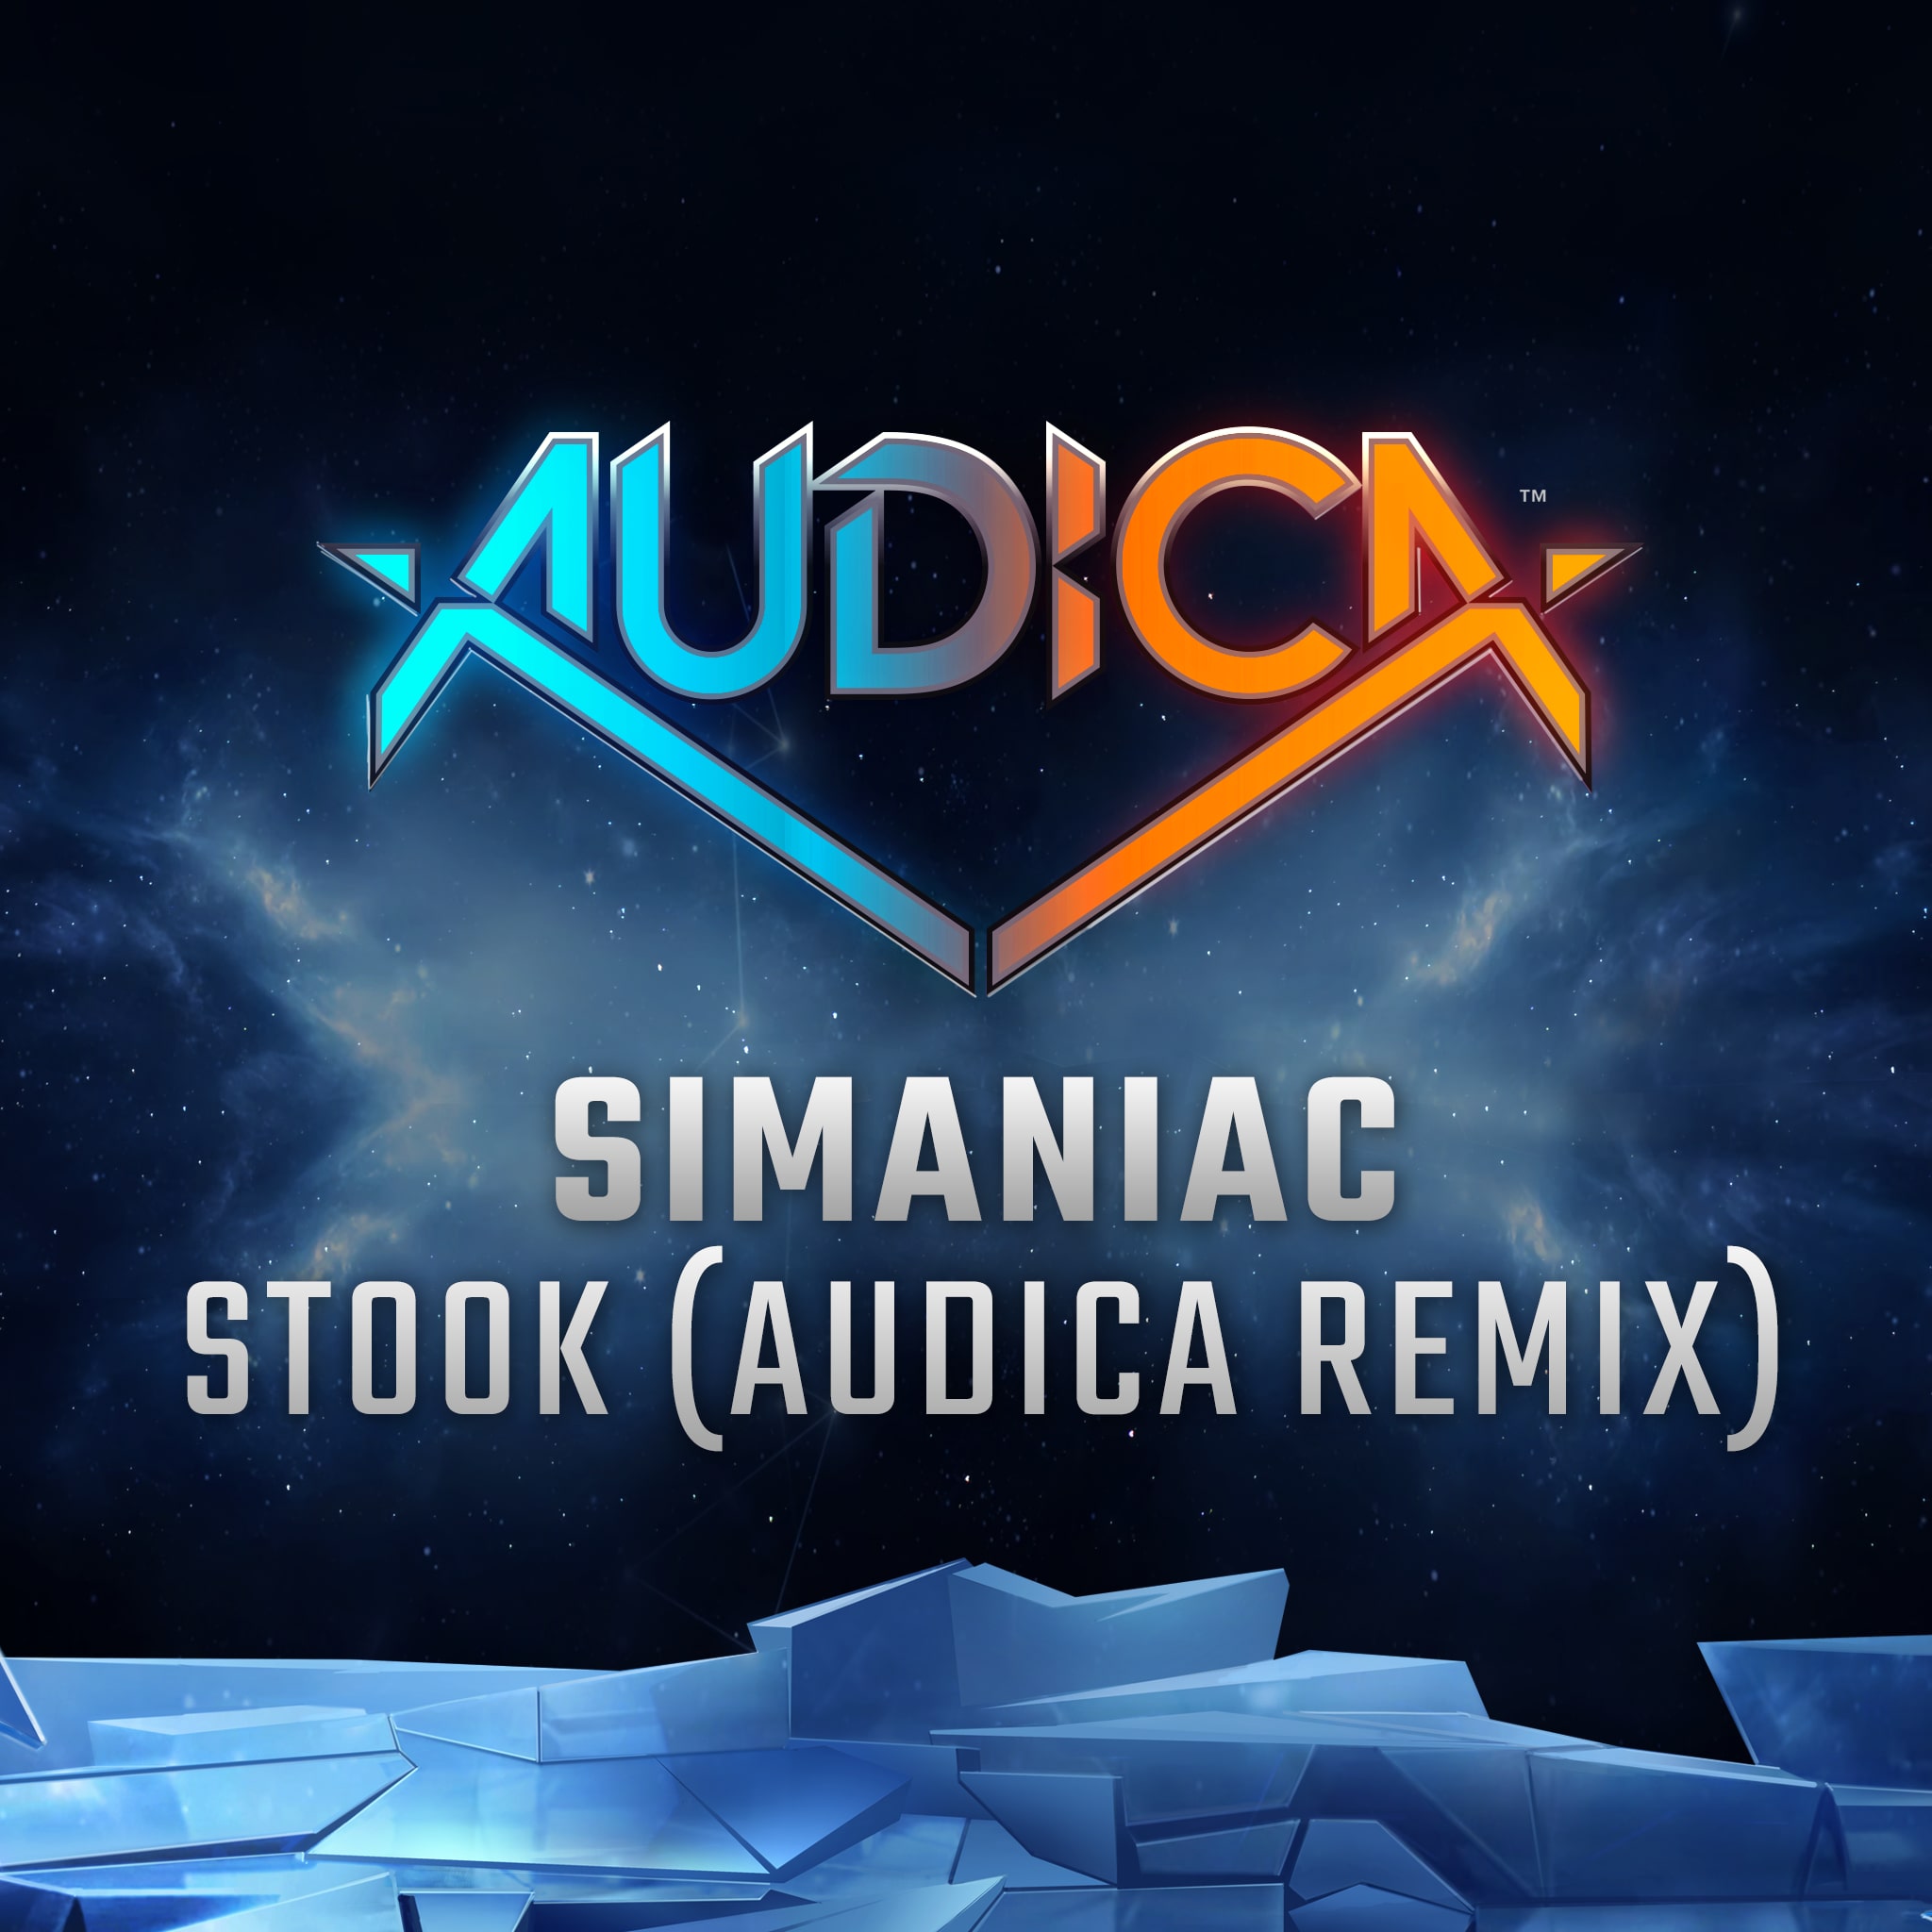 'Stook (Audica Mix)' - Simaniac